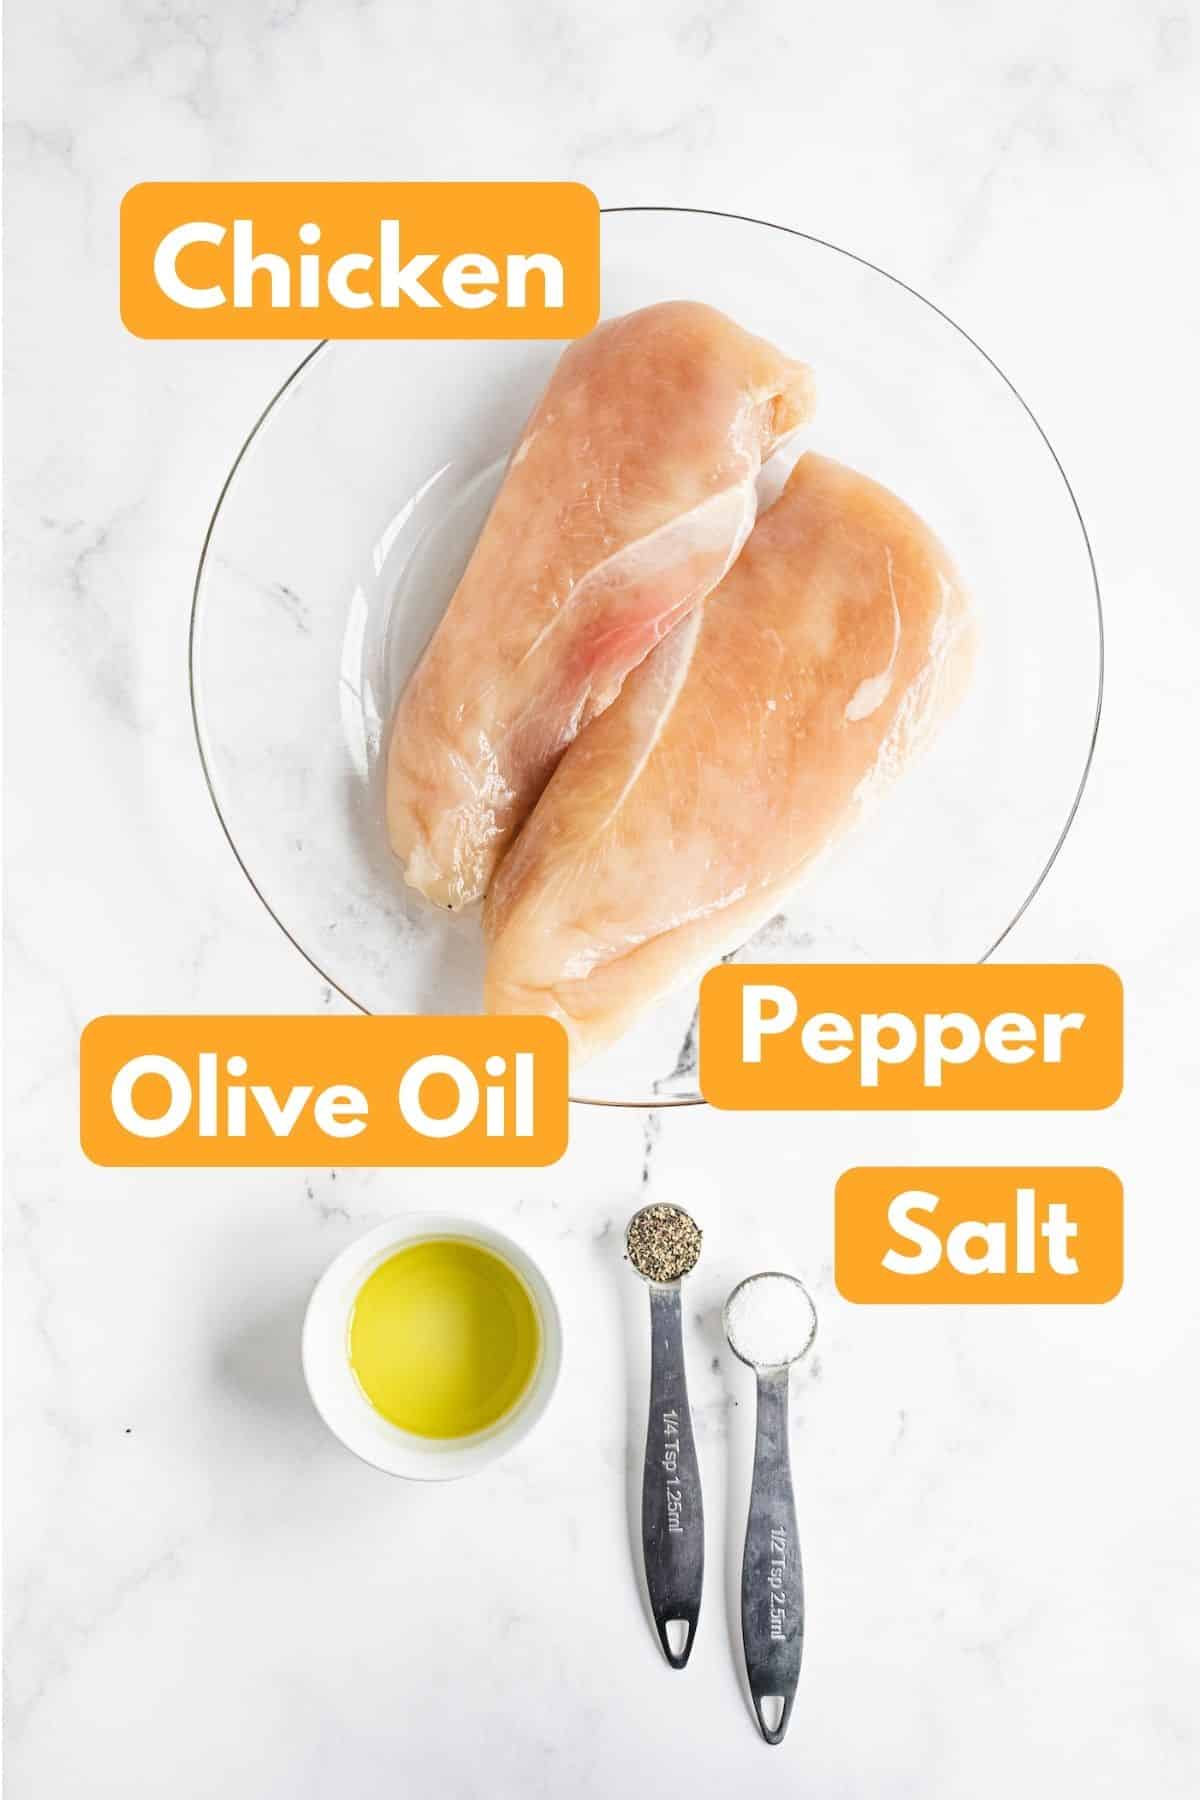 Ingredients to cook chicken breast